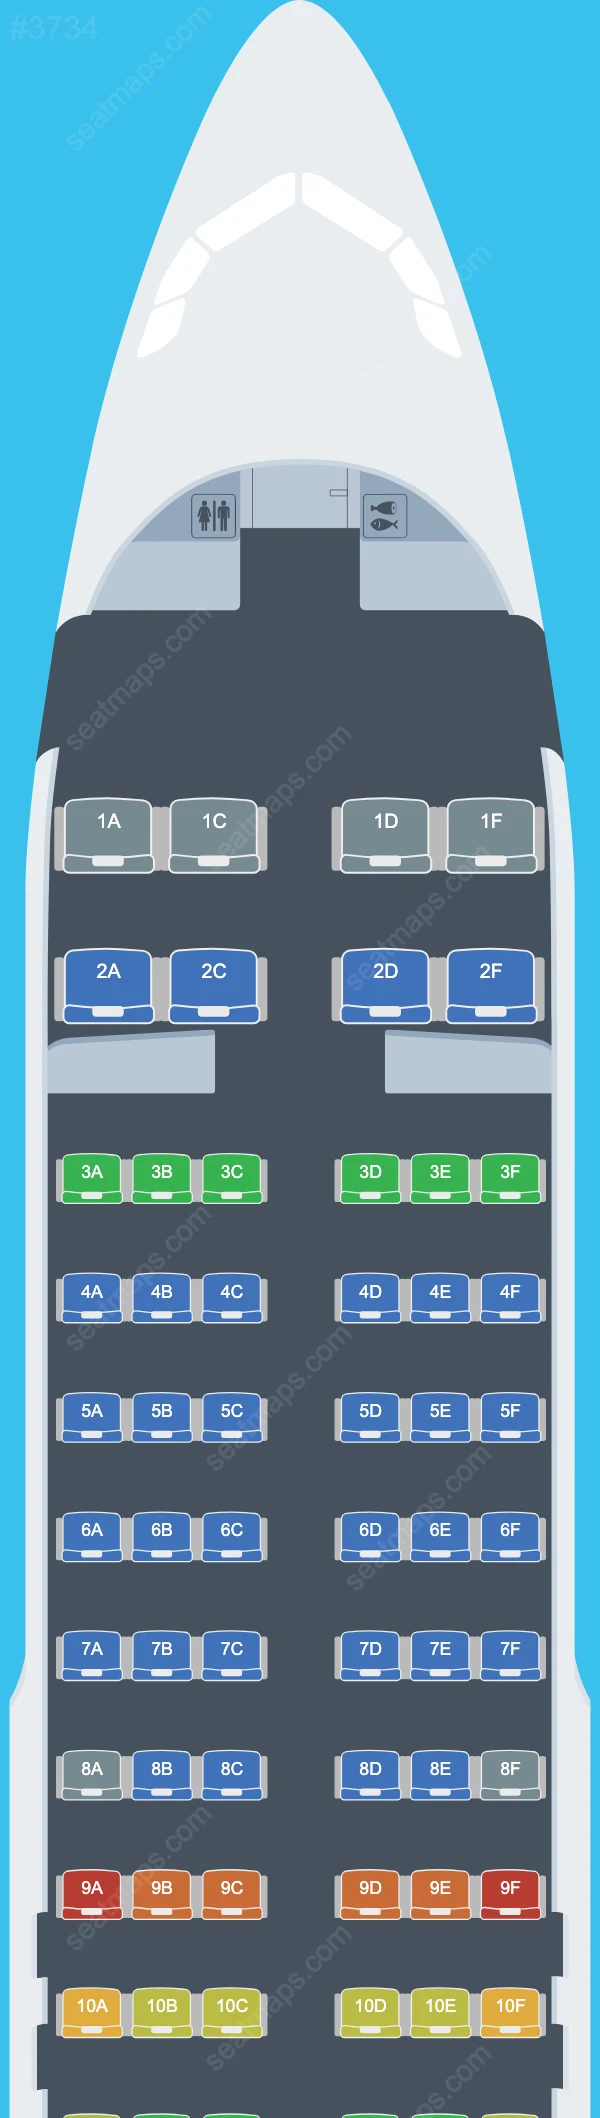 Схема салона Sichuan Airlines в самолете Airbus A320 A320-200 V.2